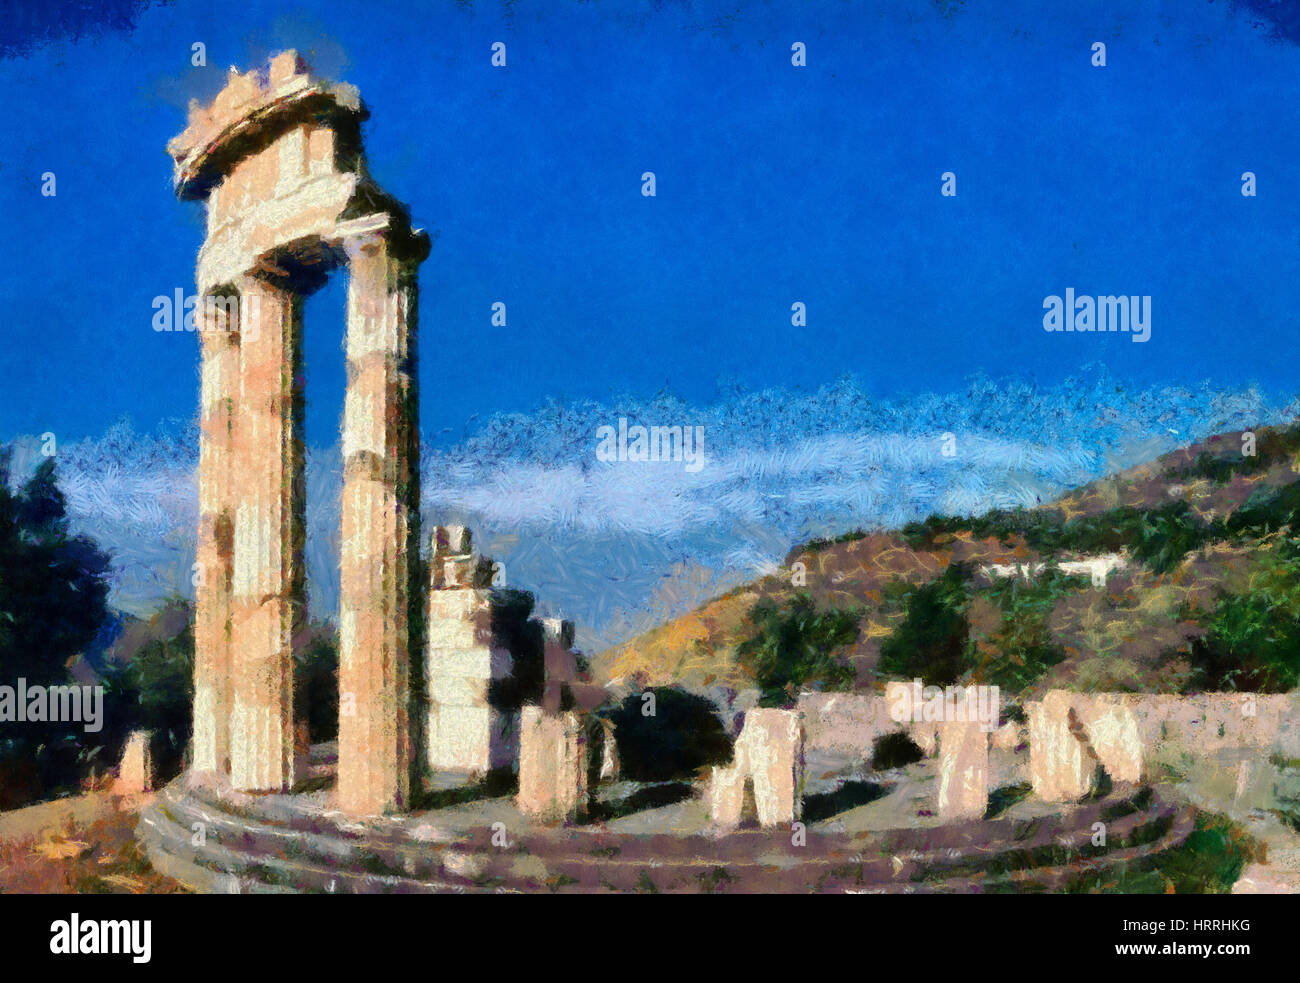 The Tholos in Athena Pronaia temple in Delphi, Central Greece Stock Photo